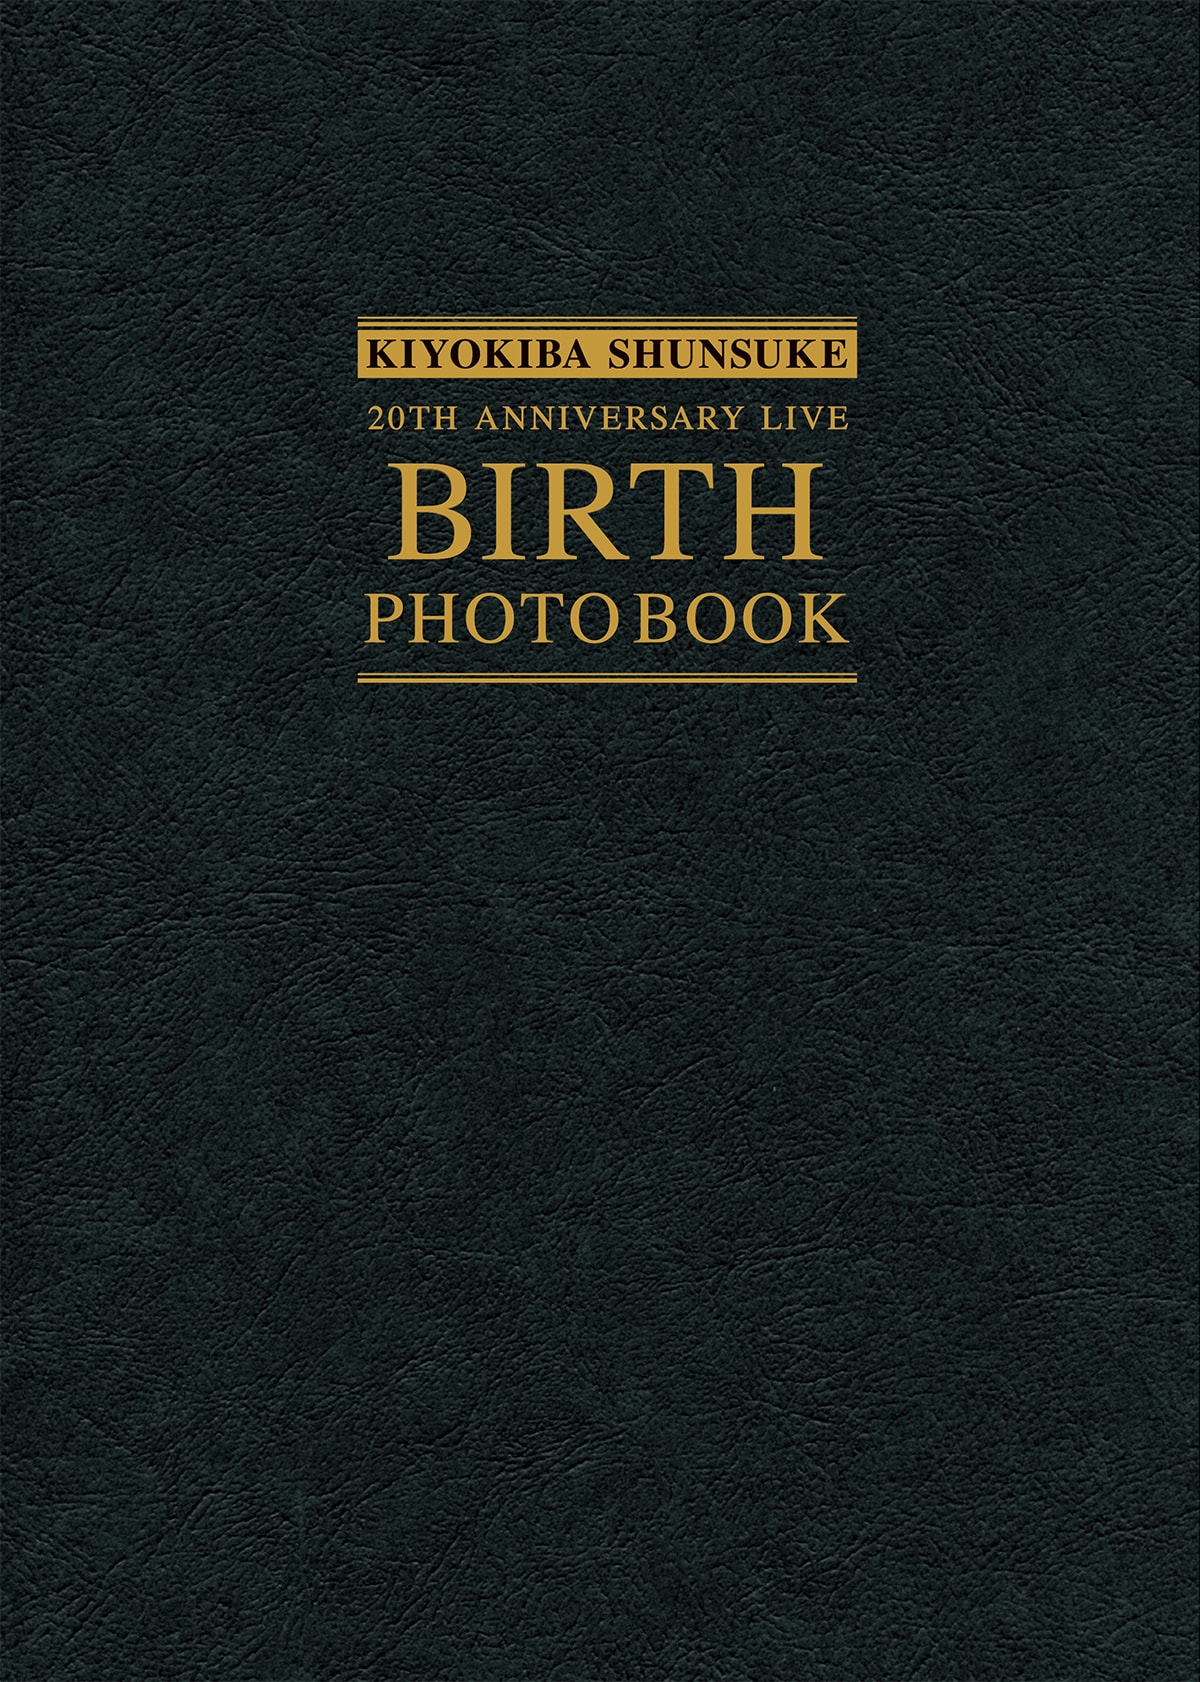 KIYOKIBA SHUNSUKE 20TH ANNIVERSARY LIVE “BIRTH” PHOTO BOOK